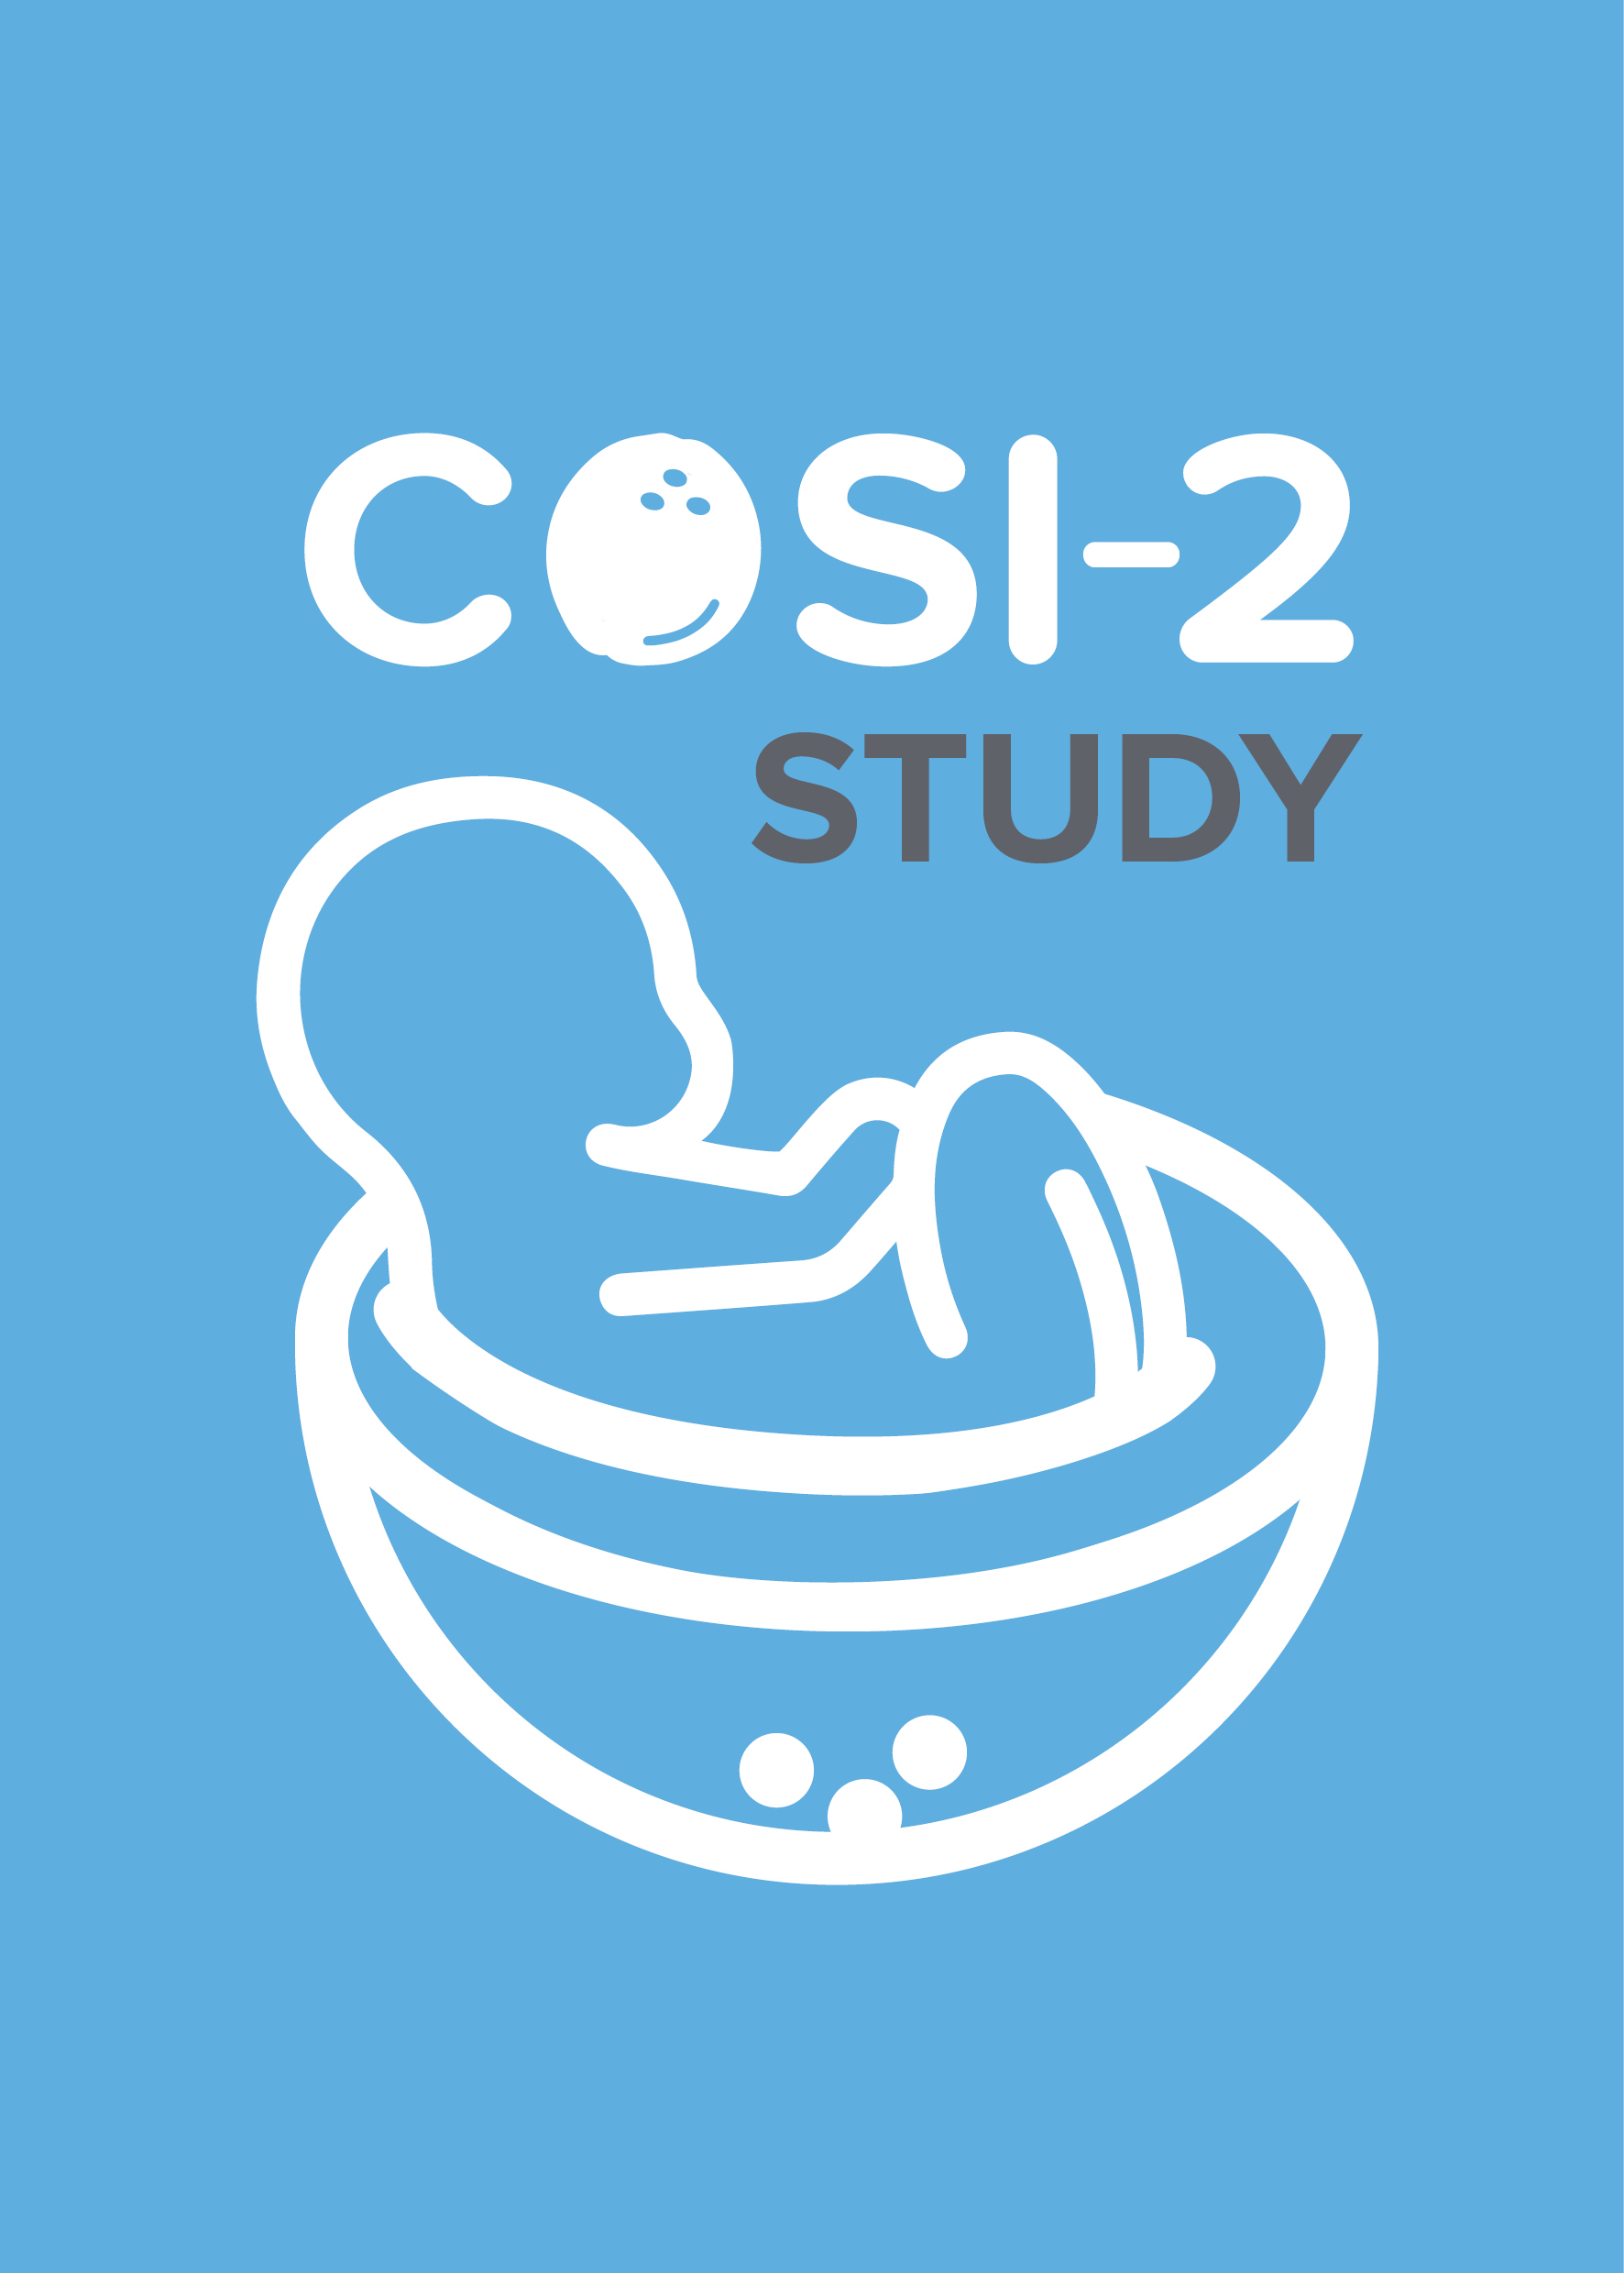 COSI 2 STUDY - logo2.jpg